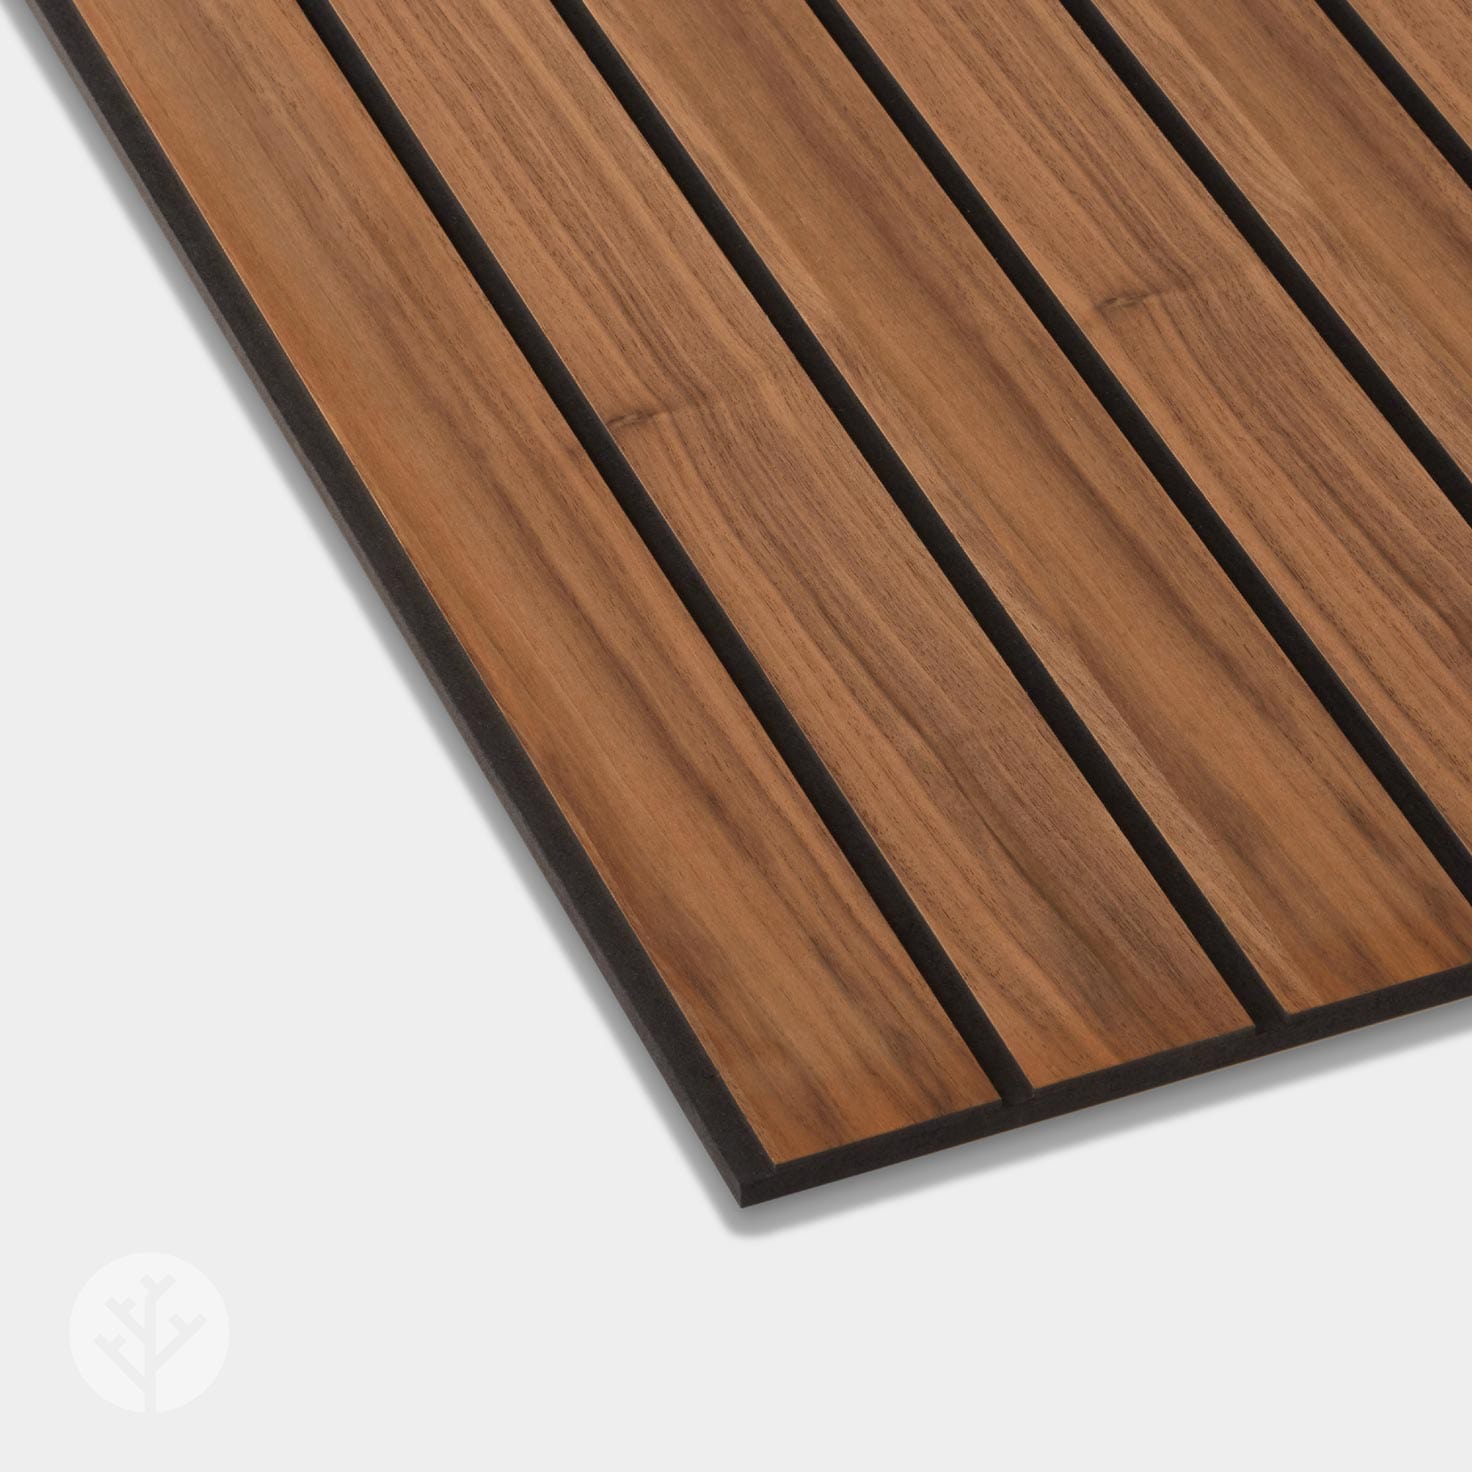 Slatpanel® Luxury Walnut Non-Acoustic Wide Slat Wood Wall Panels